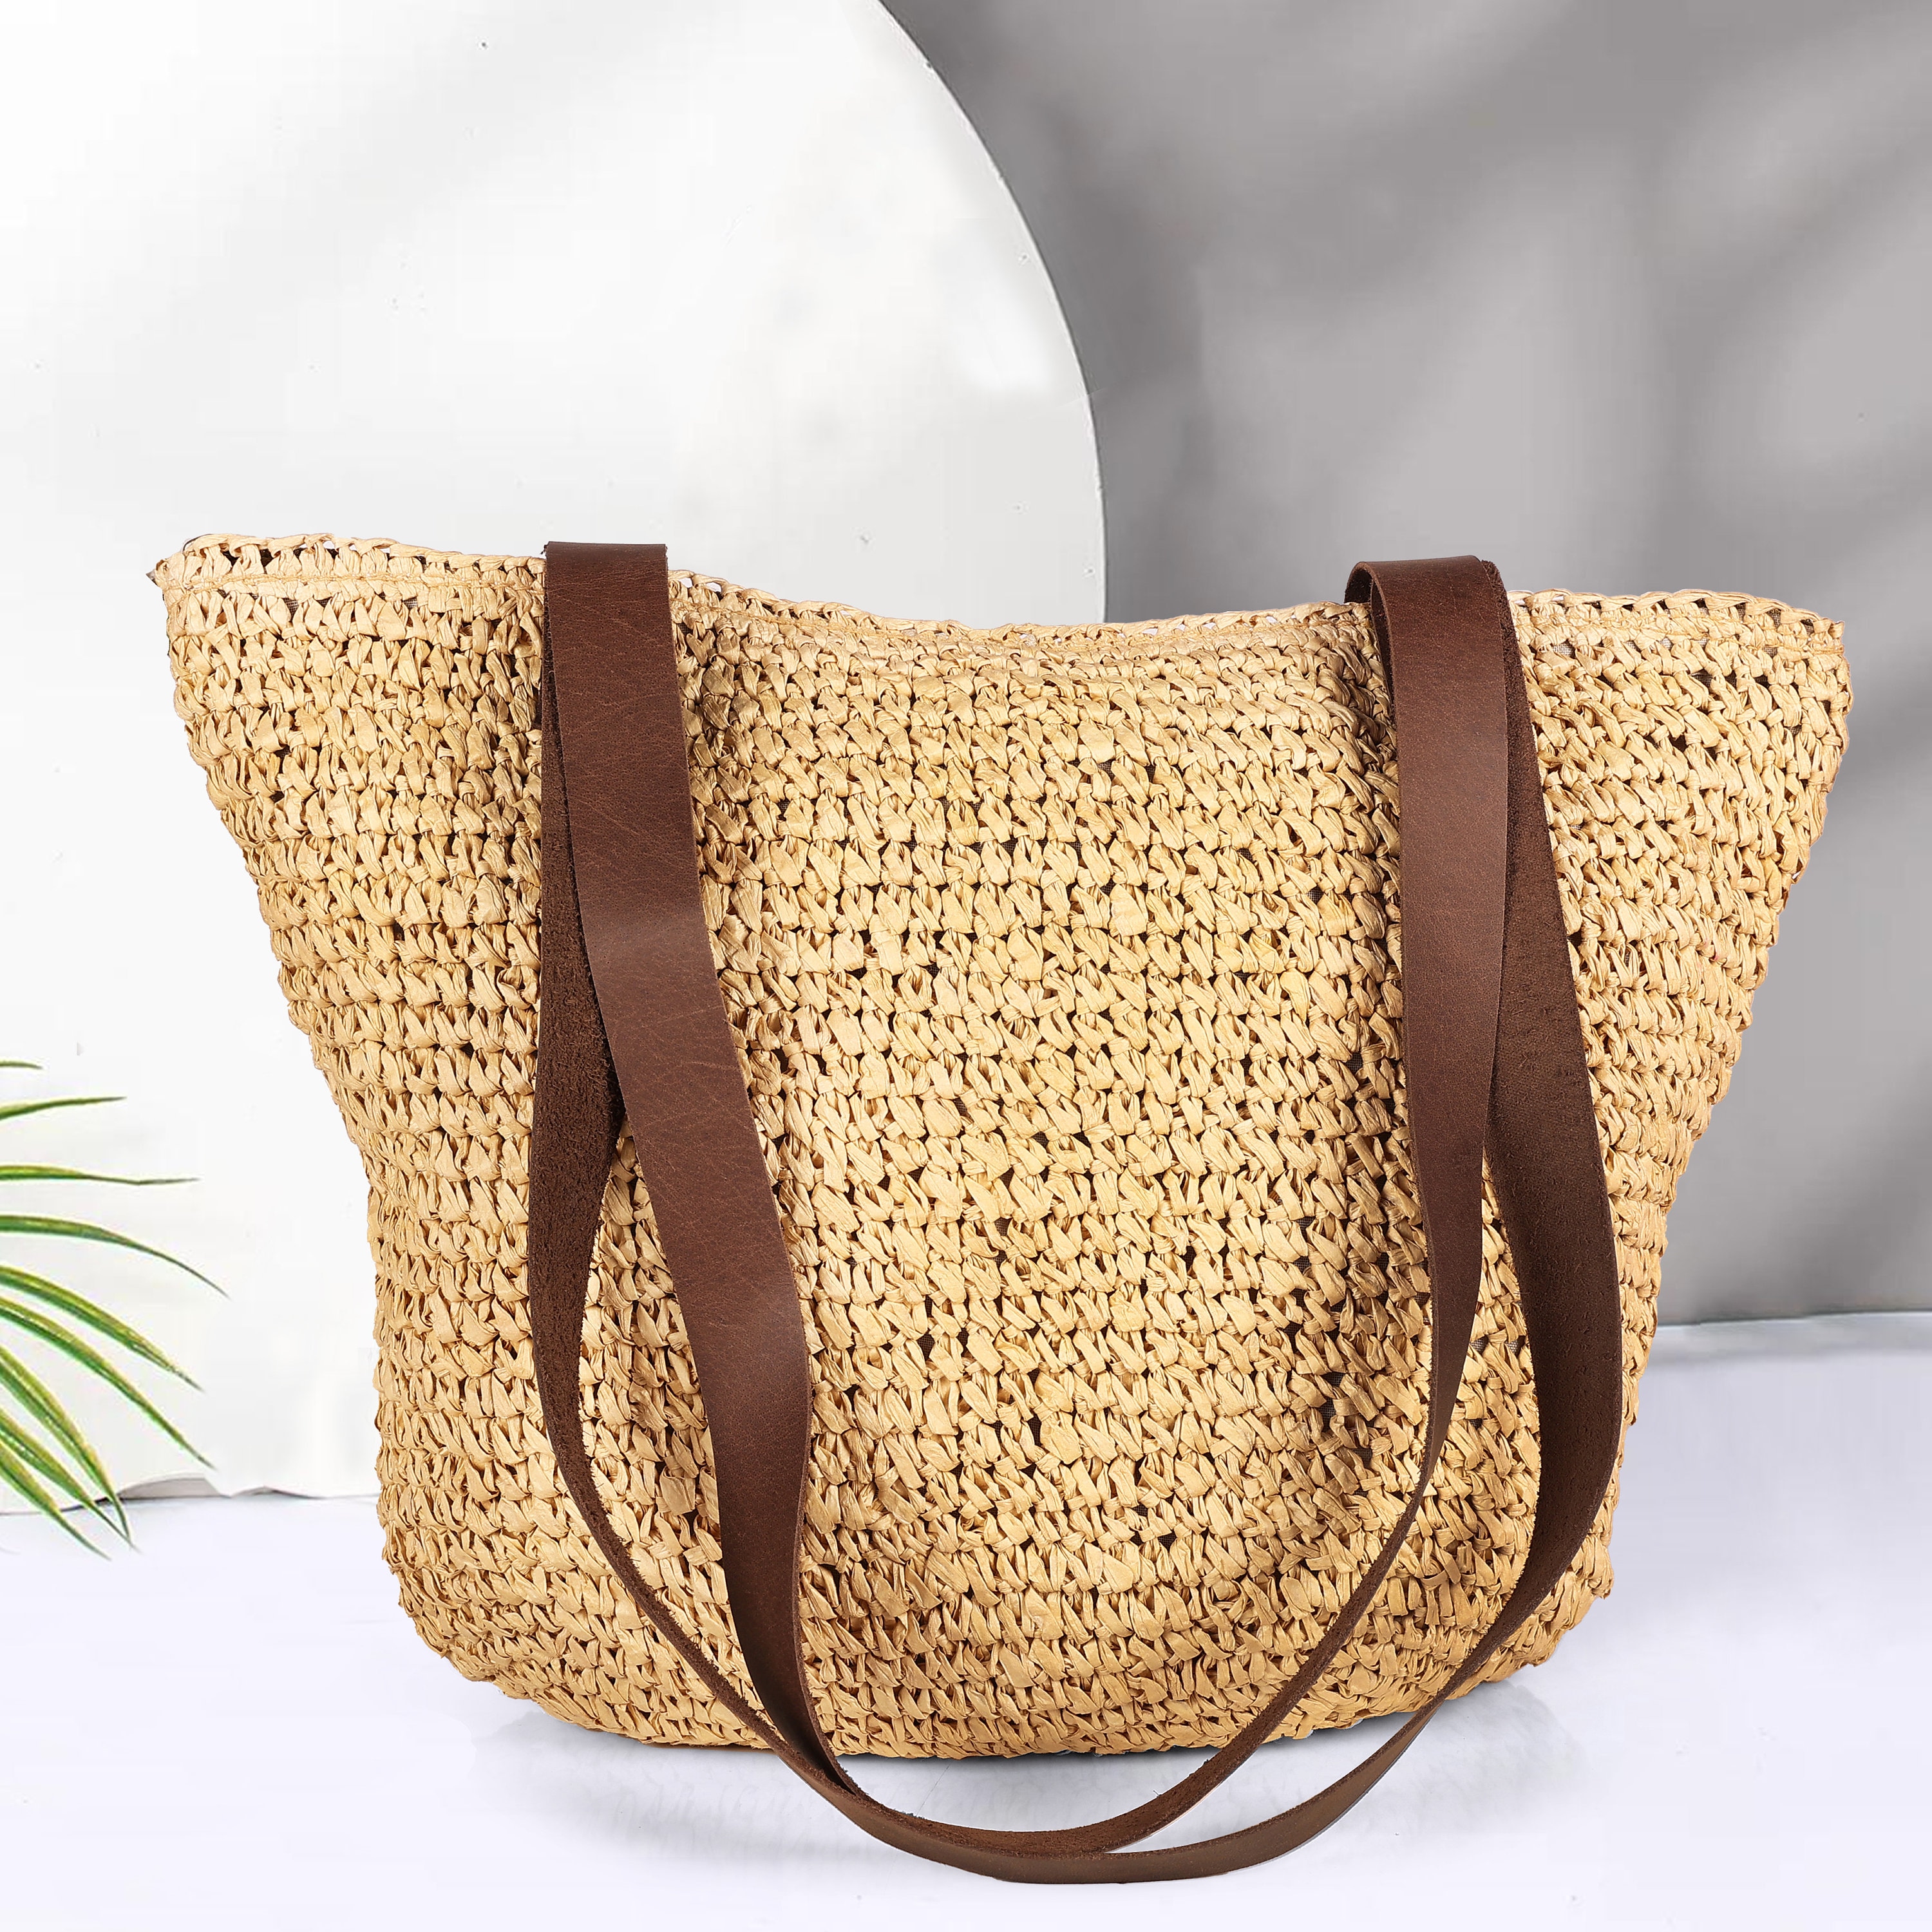 Shop our Unique Designer Basket Bags Handwoven in Bali